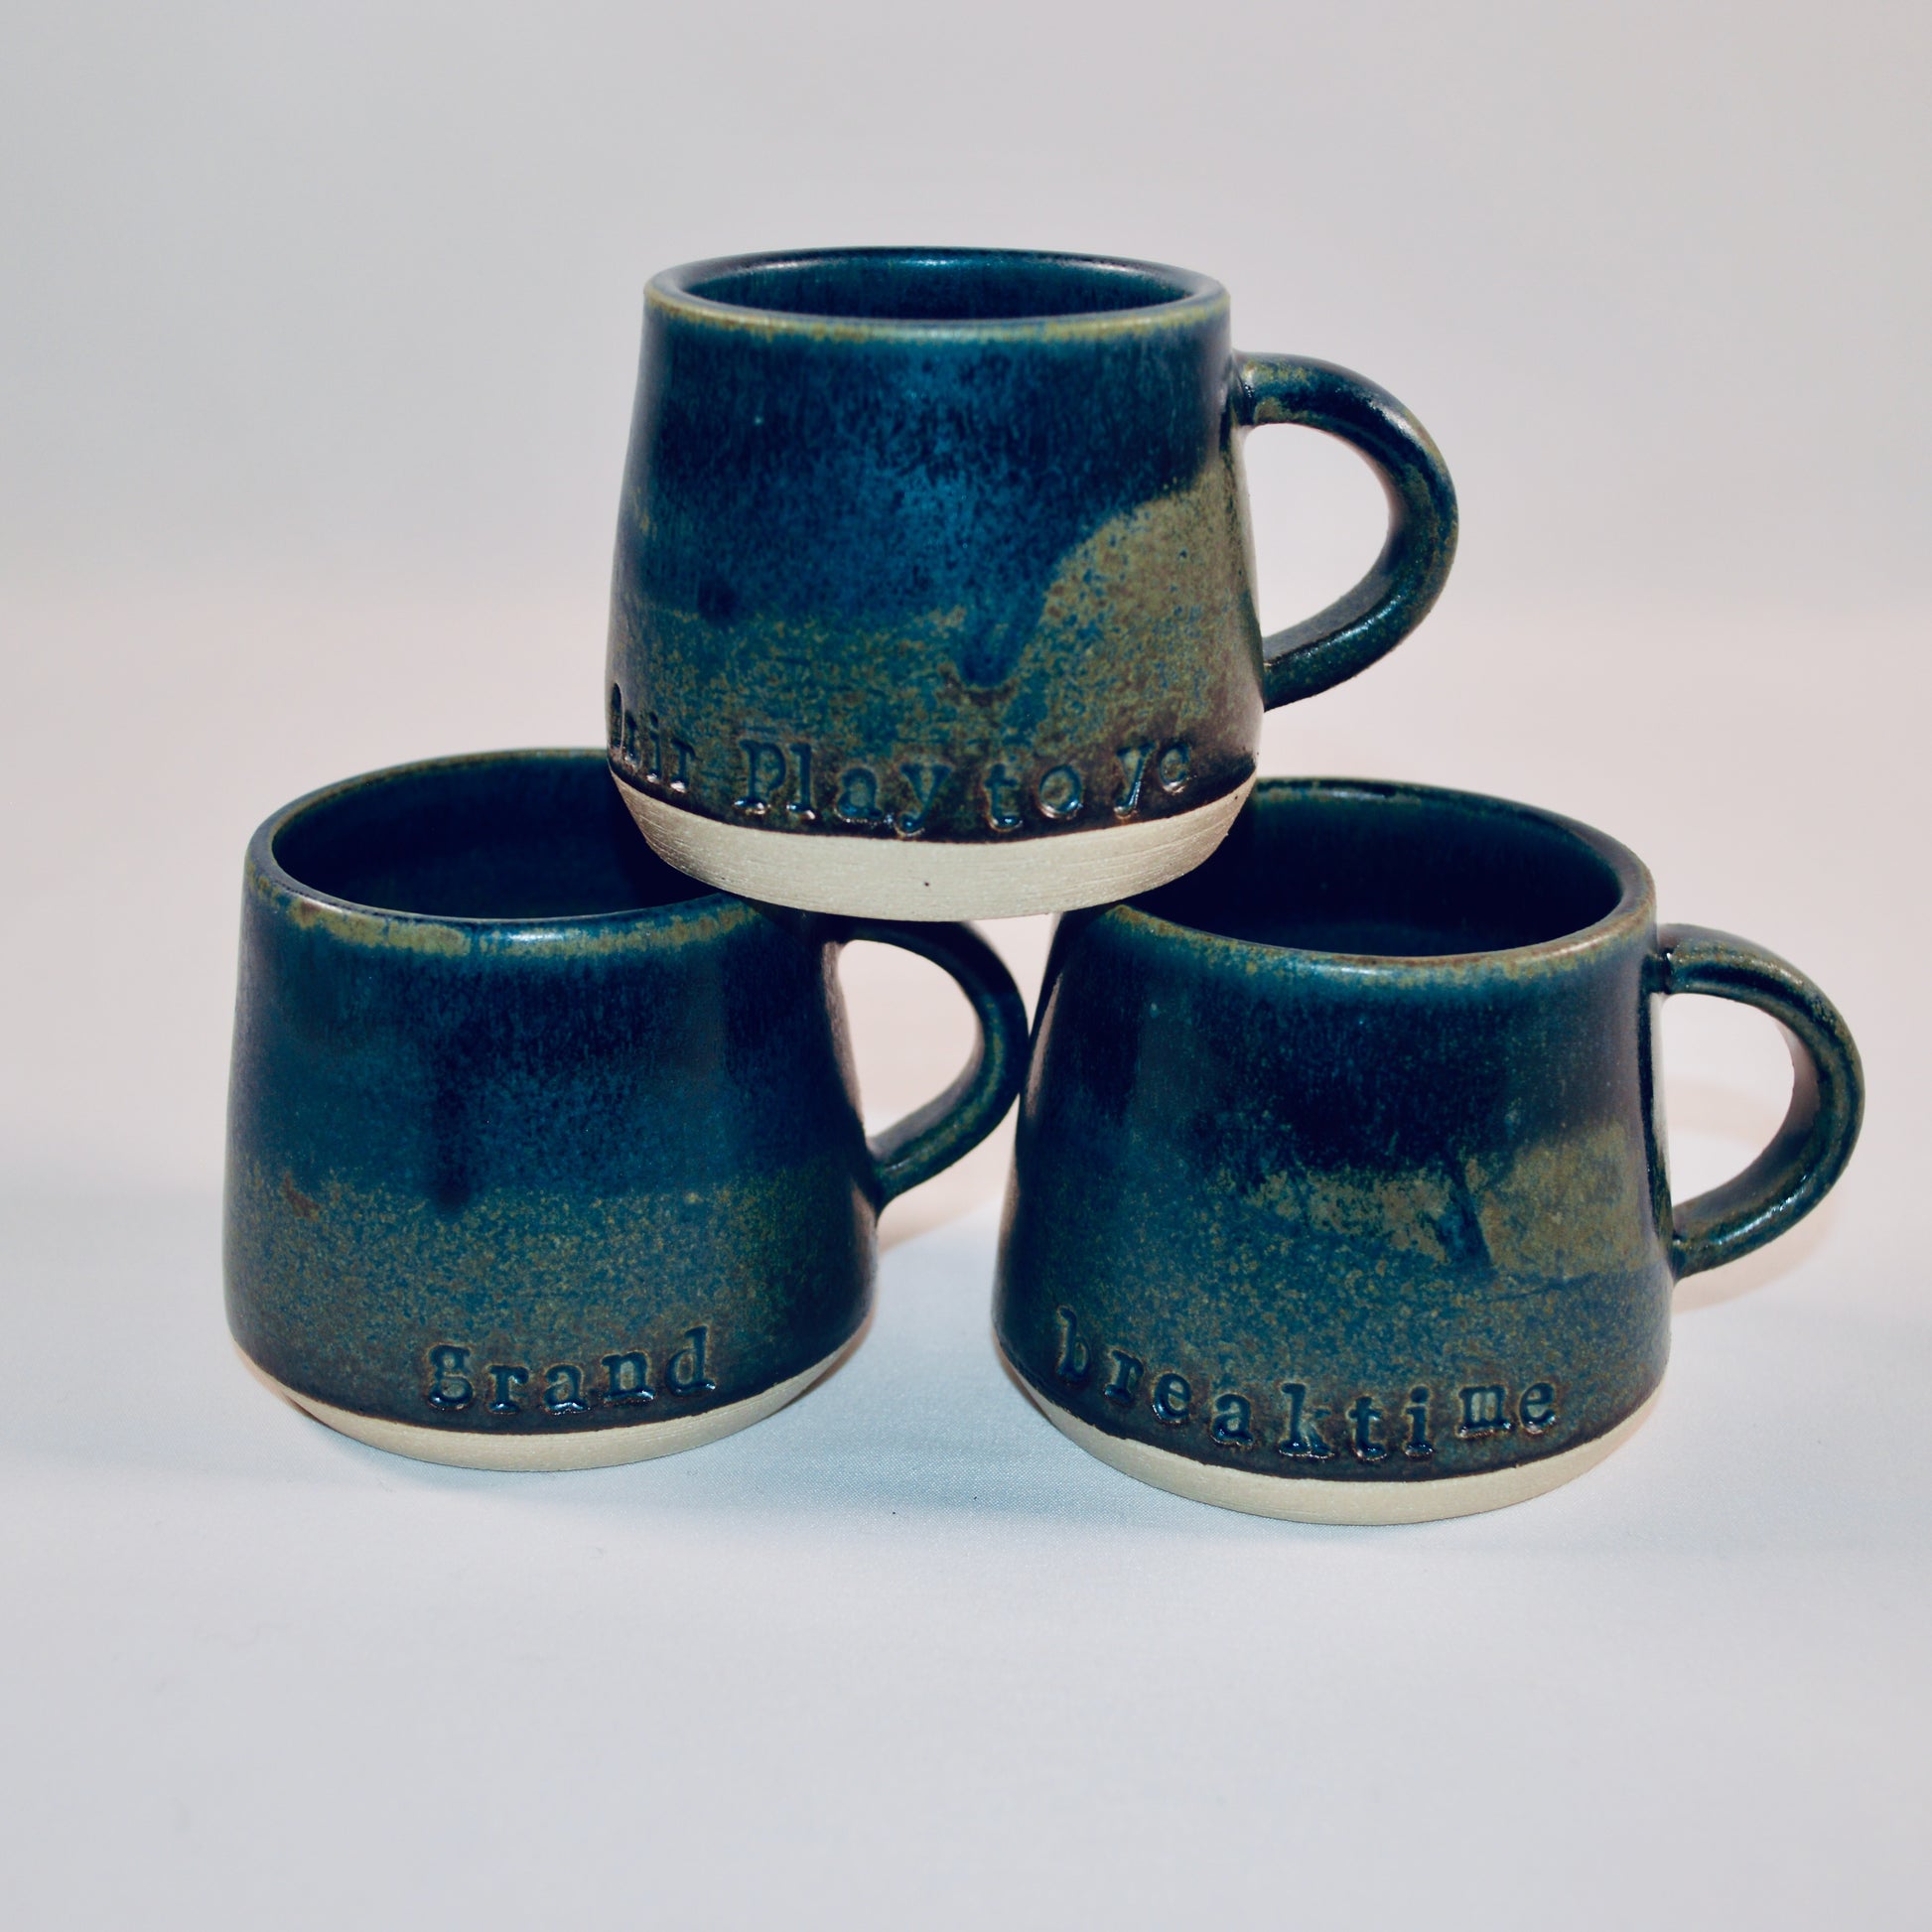 Handmade Espresso Cups - Drumgreenagh Craft & Design Shop